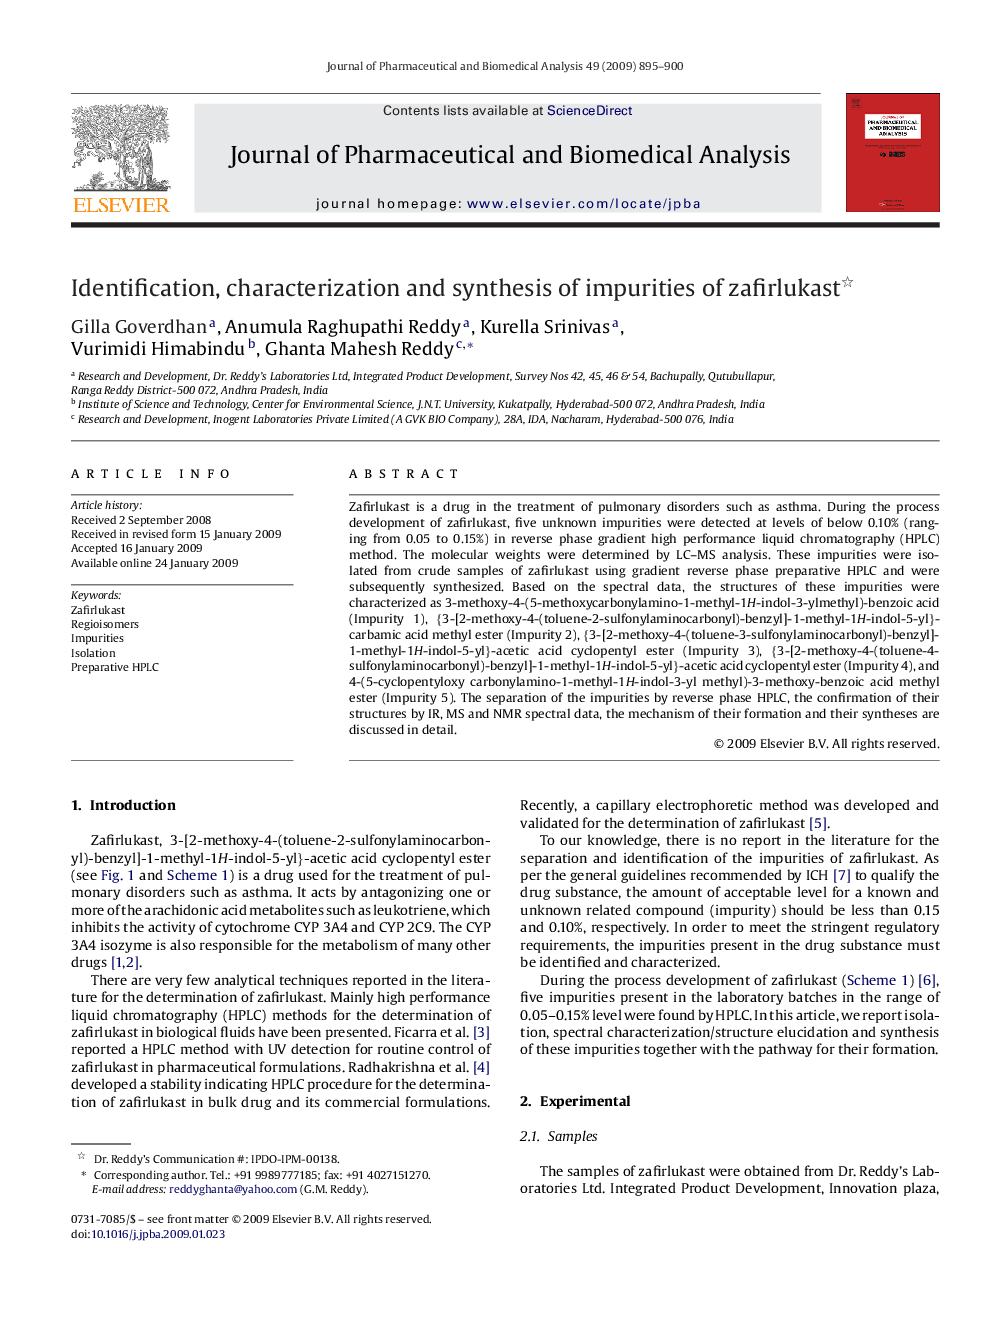 Identification, characterization and synthesis of impurities of zafirlukast 